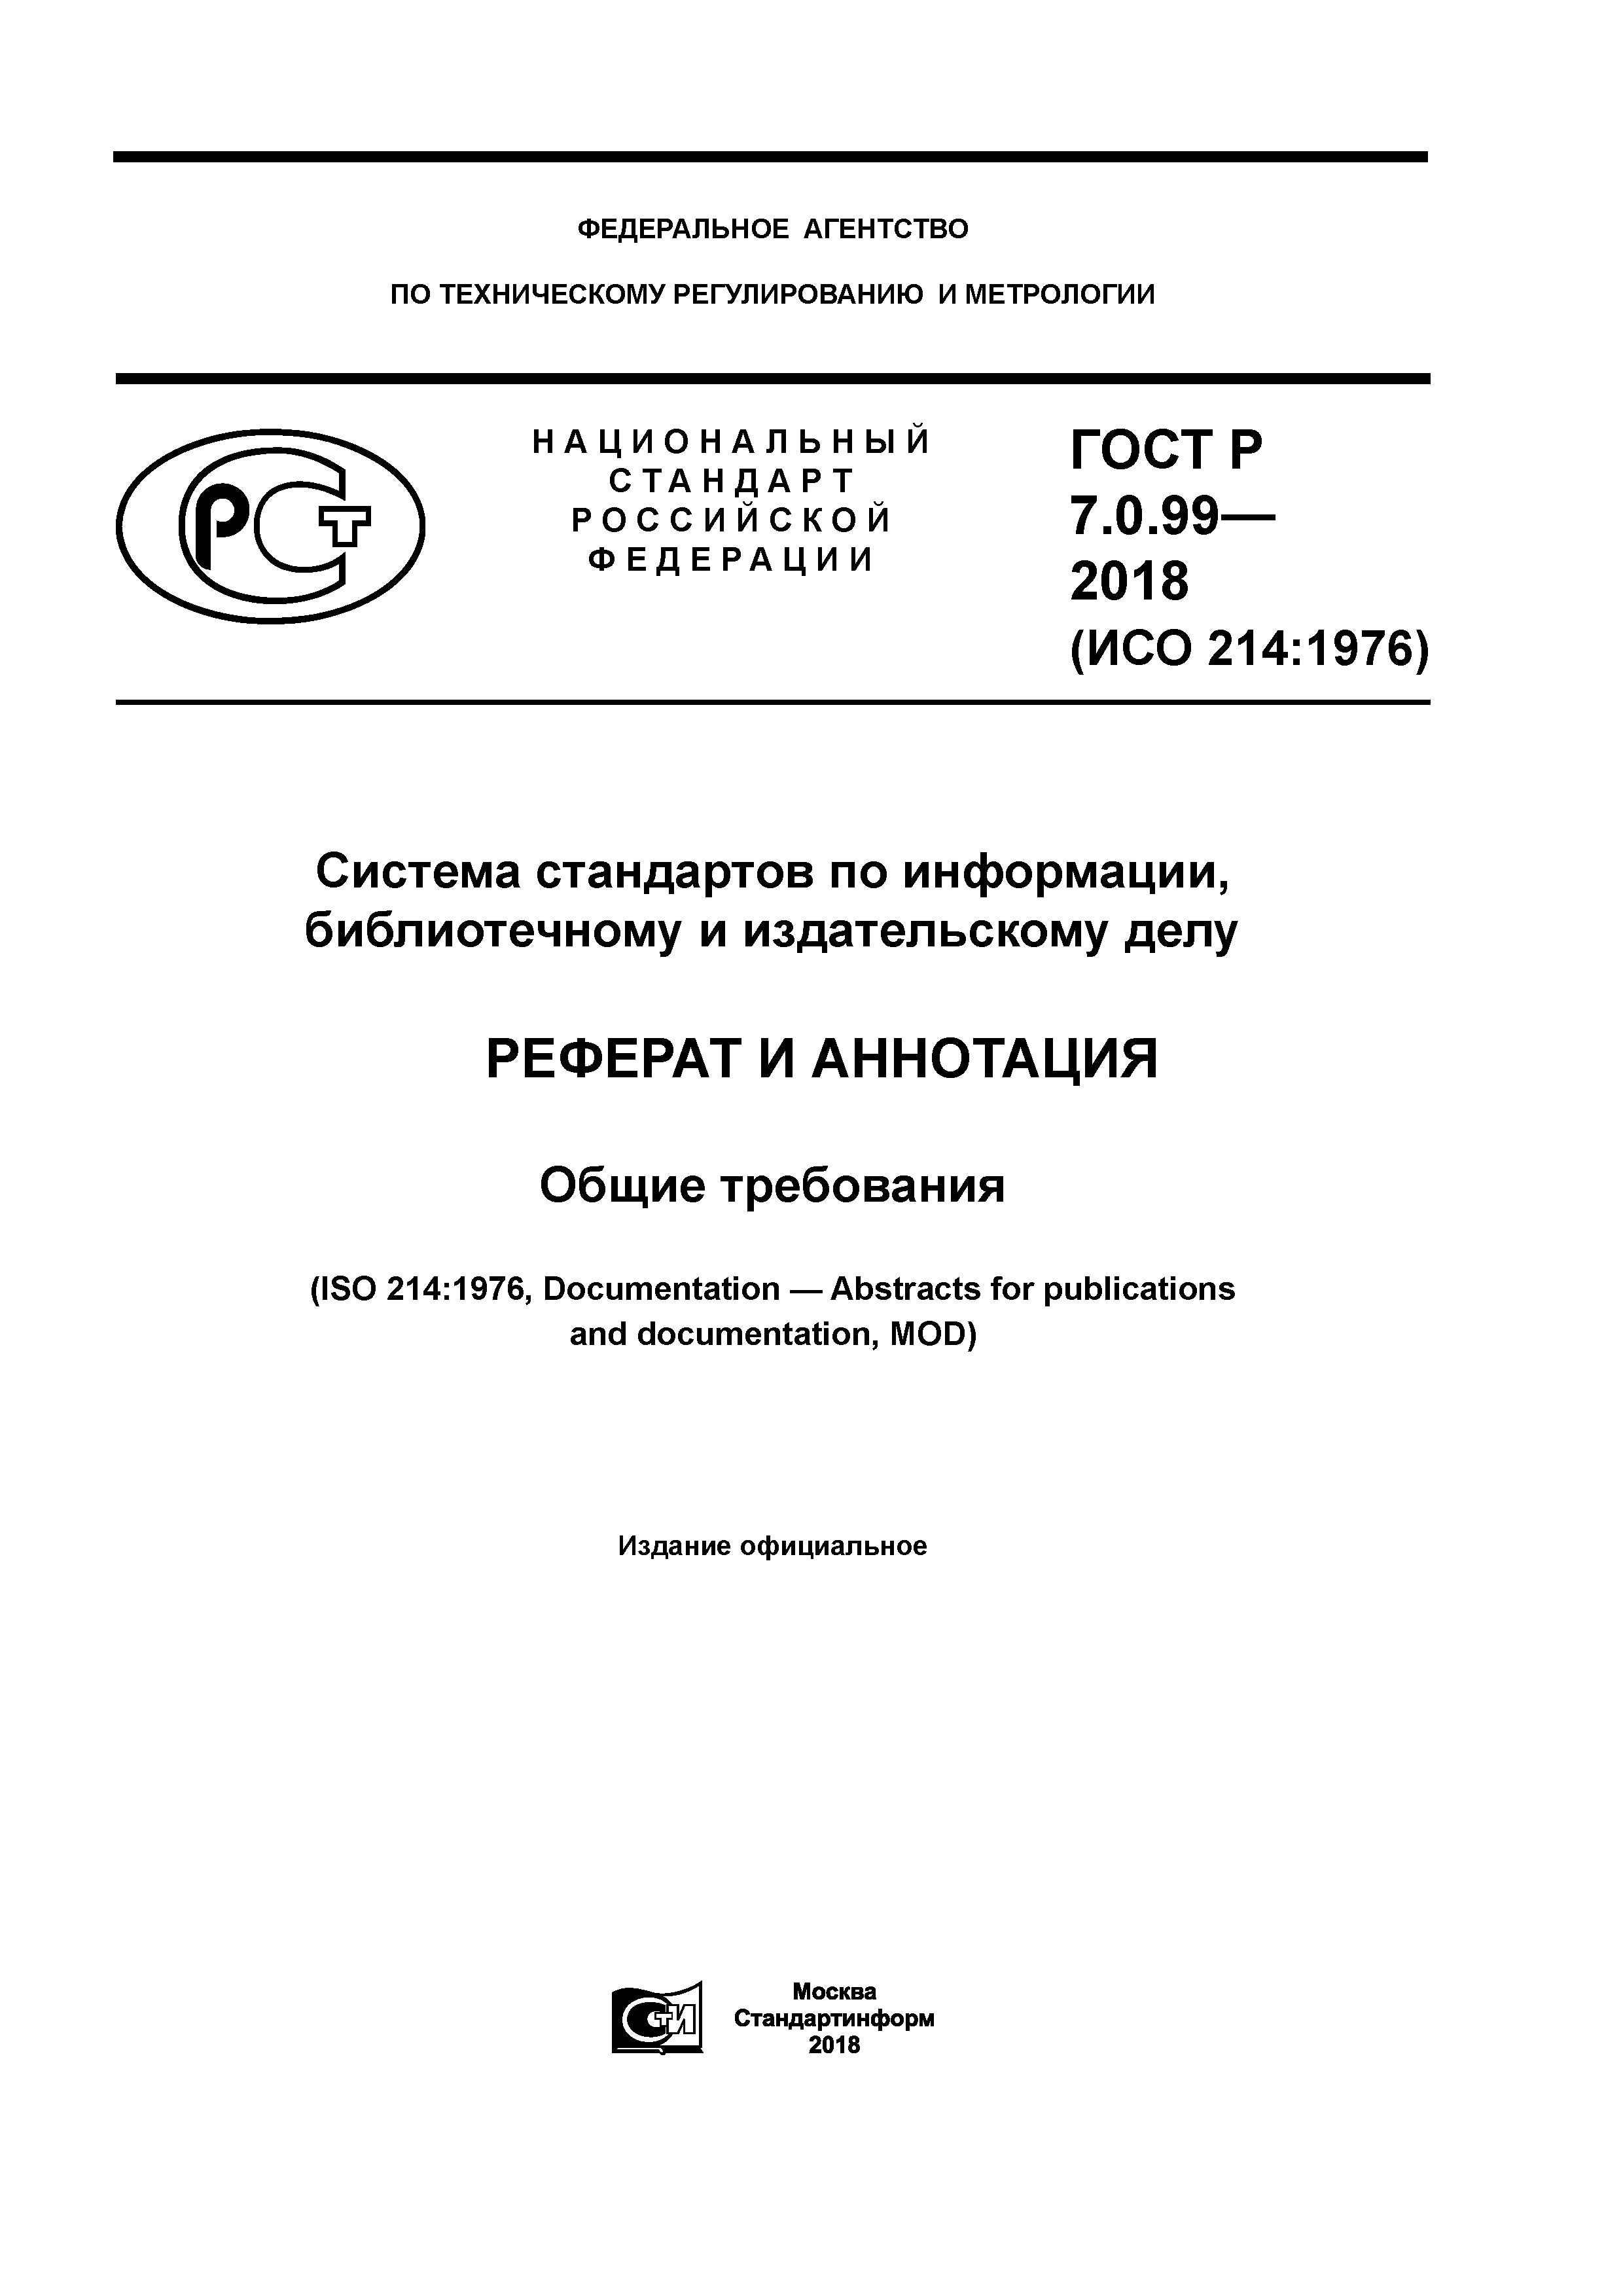 ГОСТ Р 7.0.99-2018